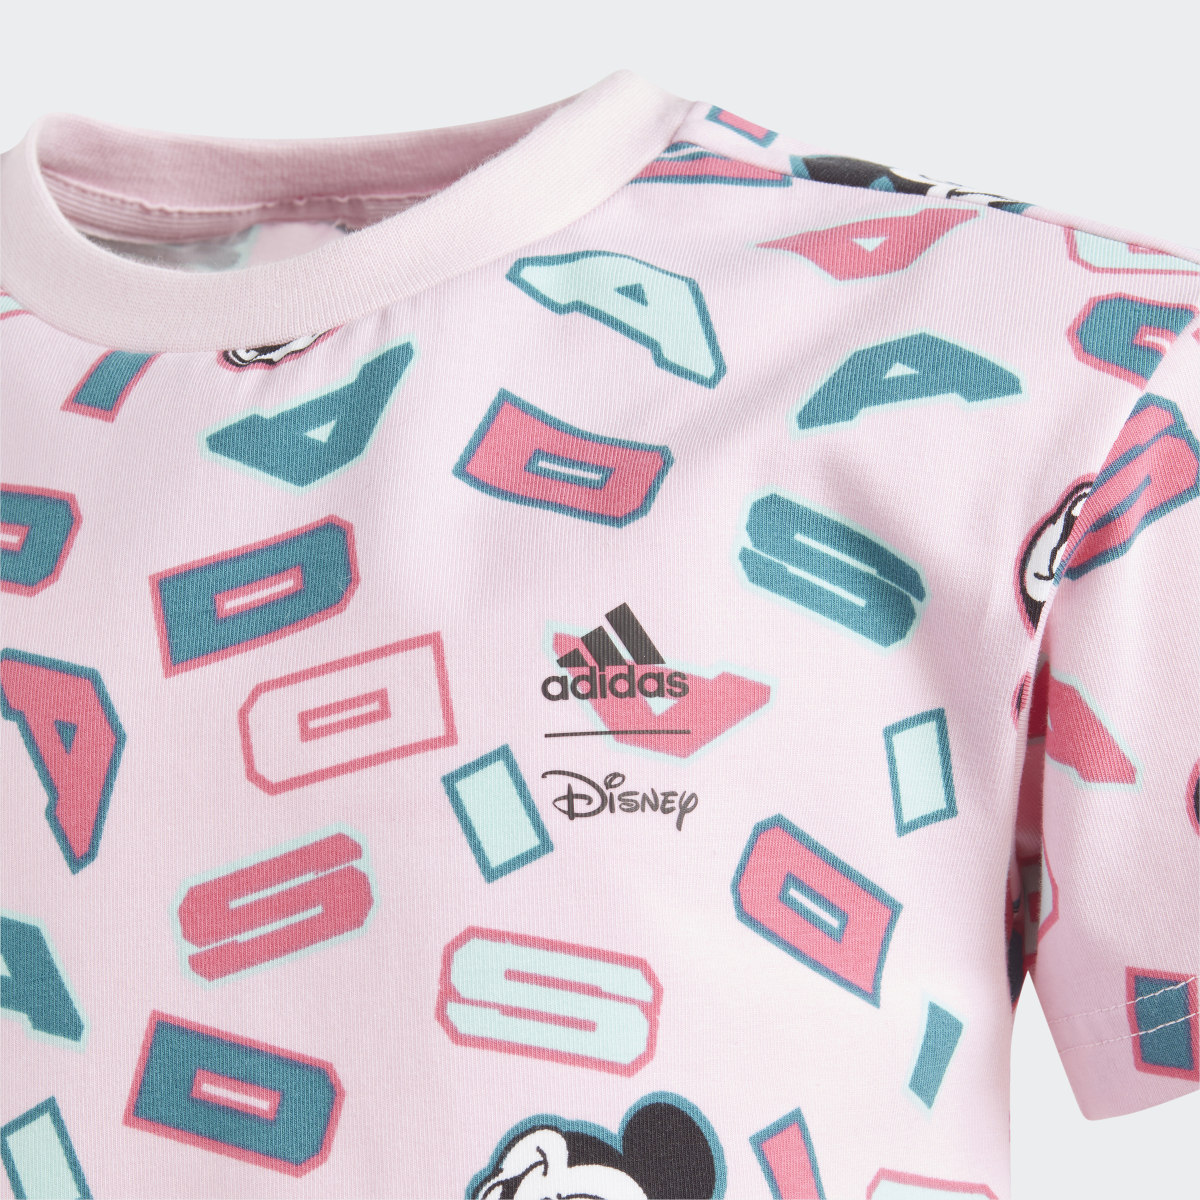 Adidas x Disney Mickey Mouse Tee and Shorts Set. 6